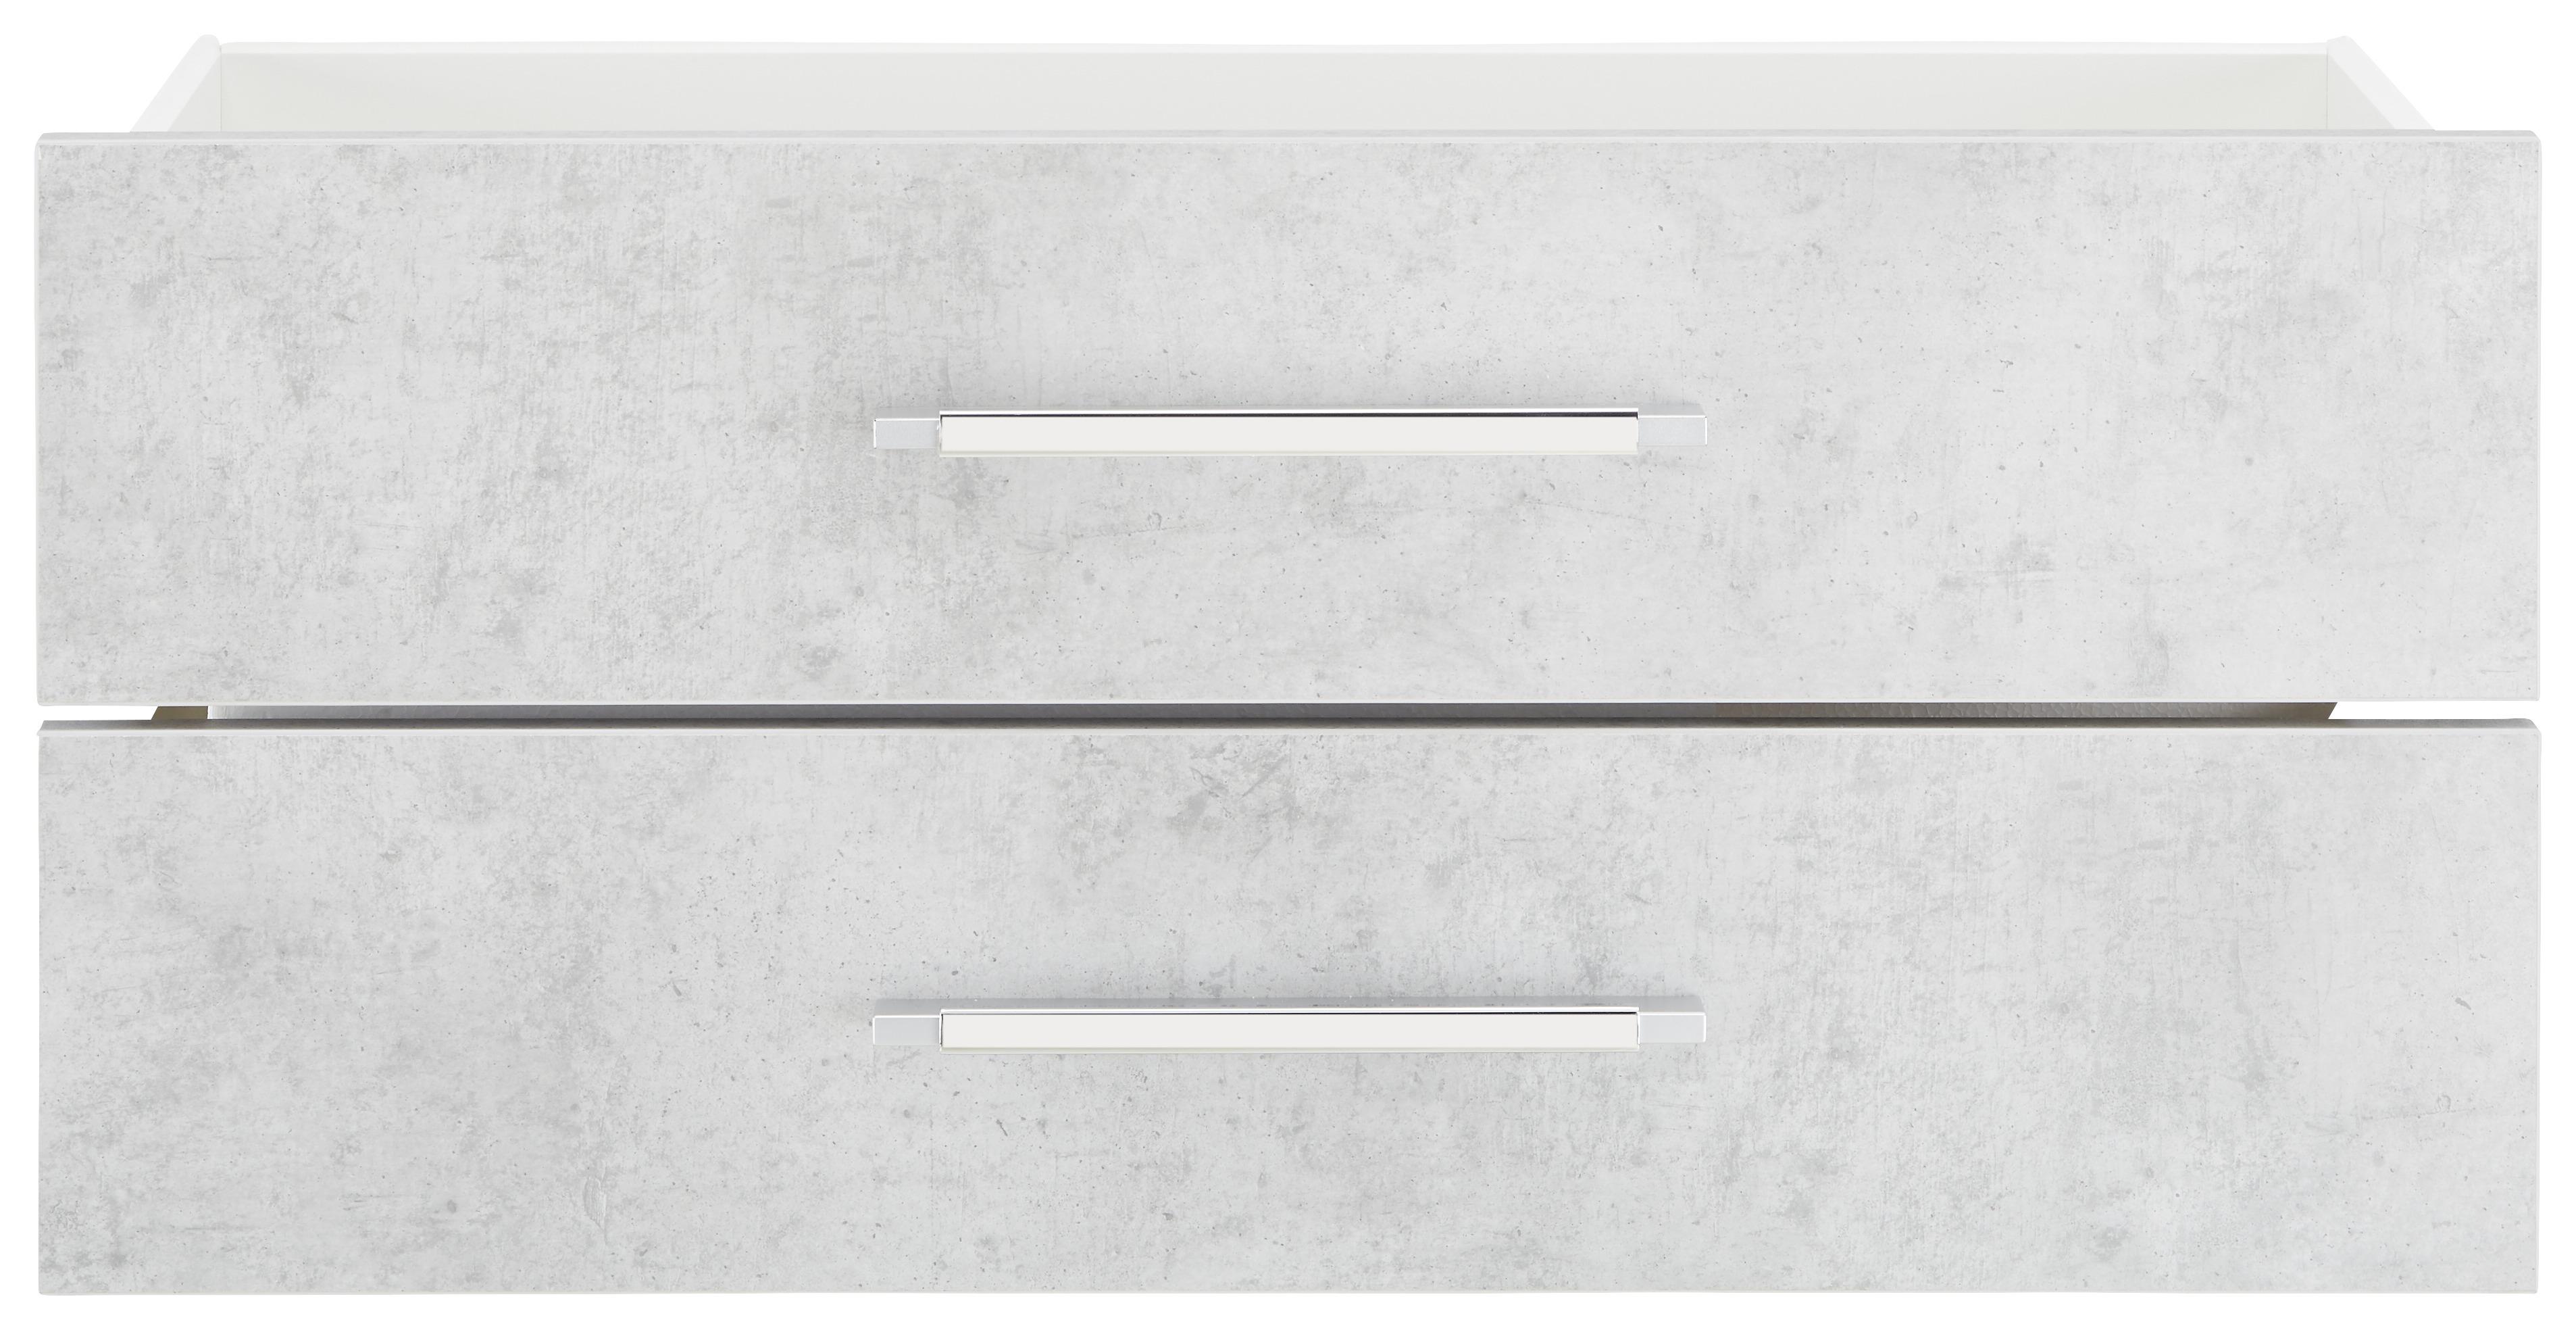 Schubladenset in Grau 2er Set - Grau, MODERN, Holzwerkstoff/Metall (75,6/34,6/36,8cm) - Modern Living